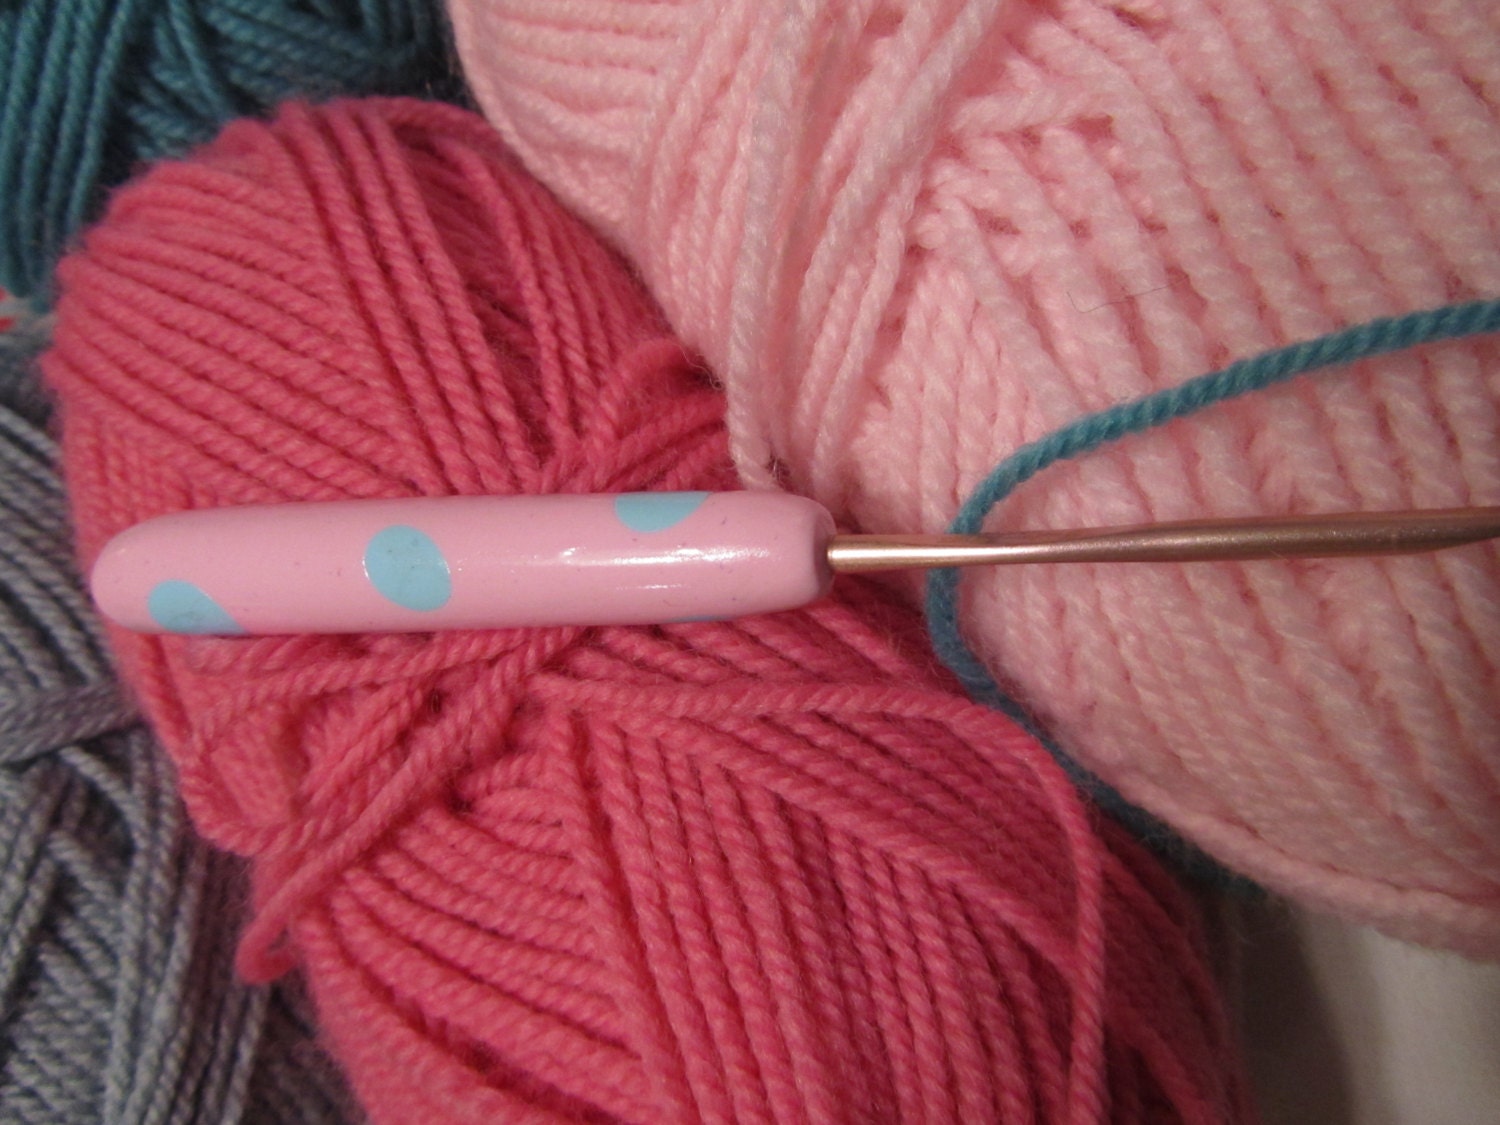 Susan Bates E/3.5mm Soft pink with baby blue polka dots crochet hook